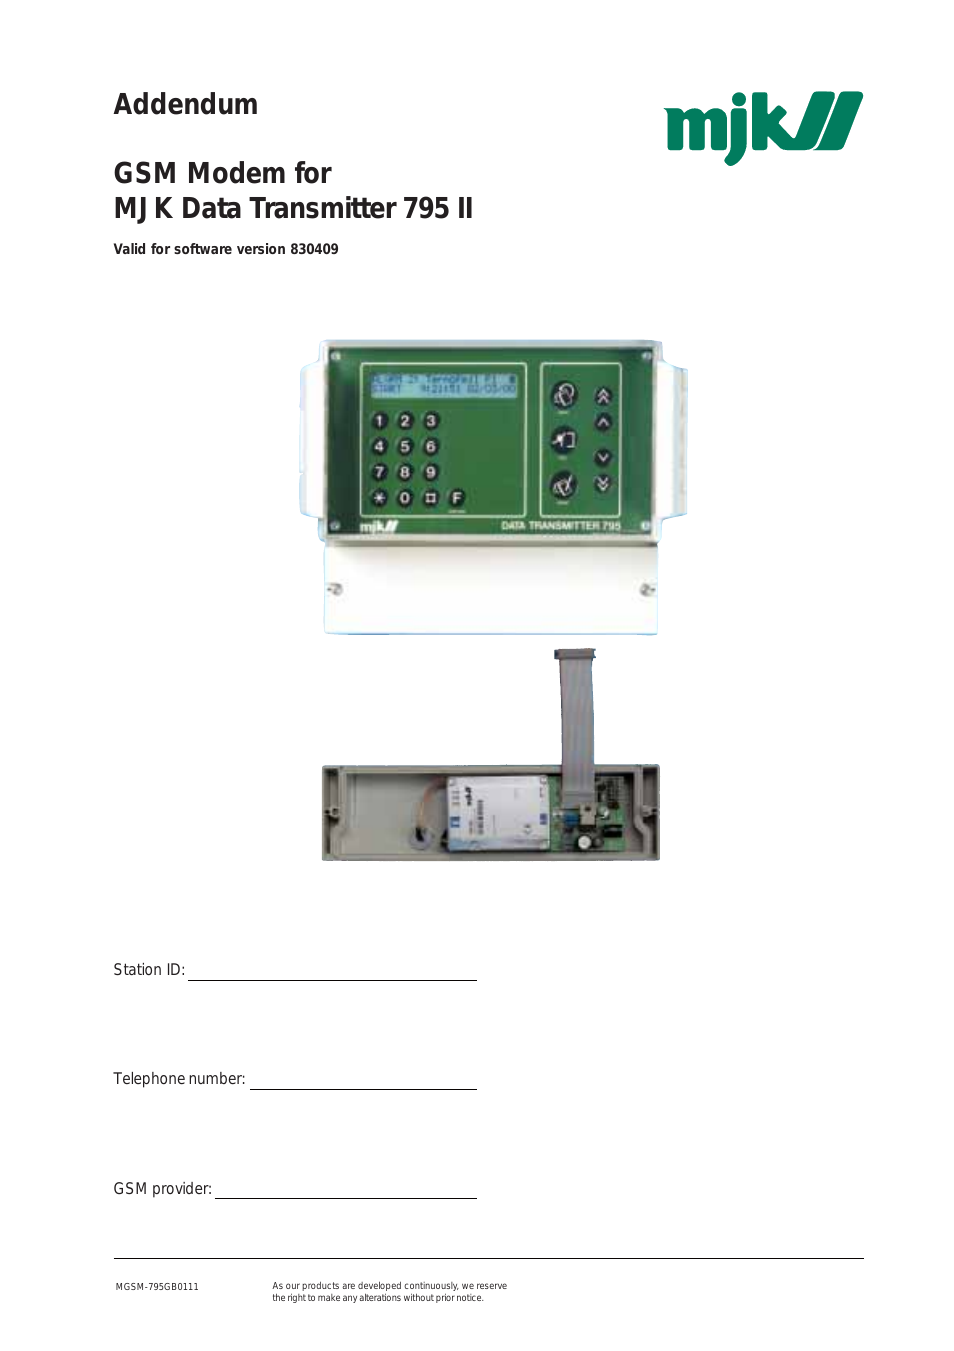 795 II MJK Data Transmitter - GSM Modem